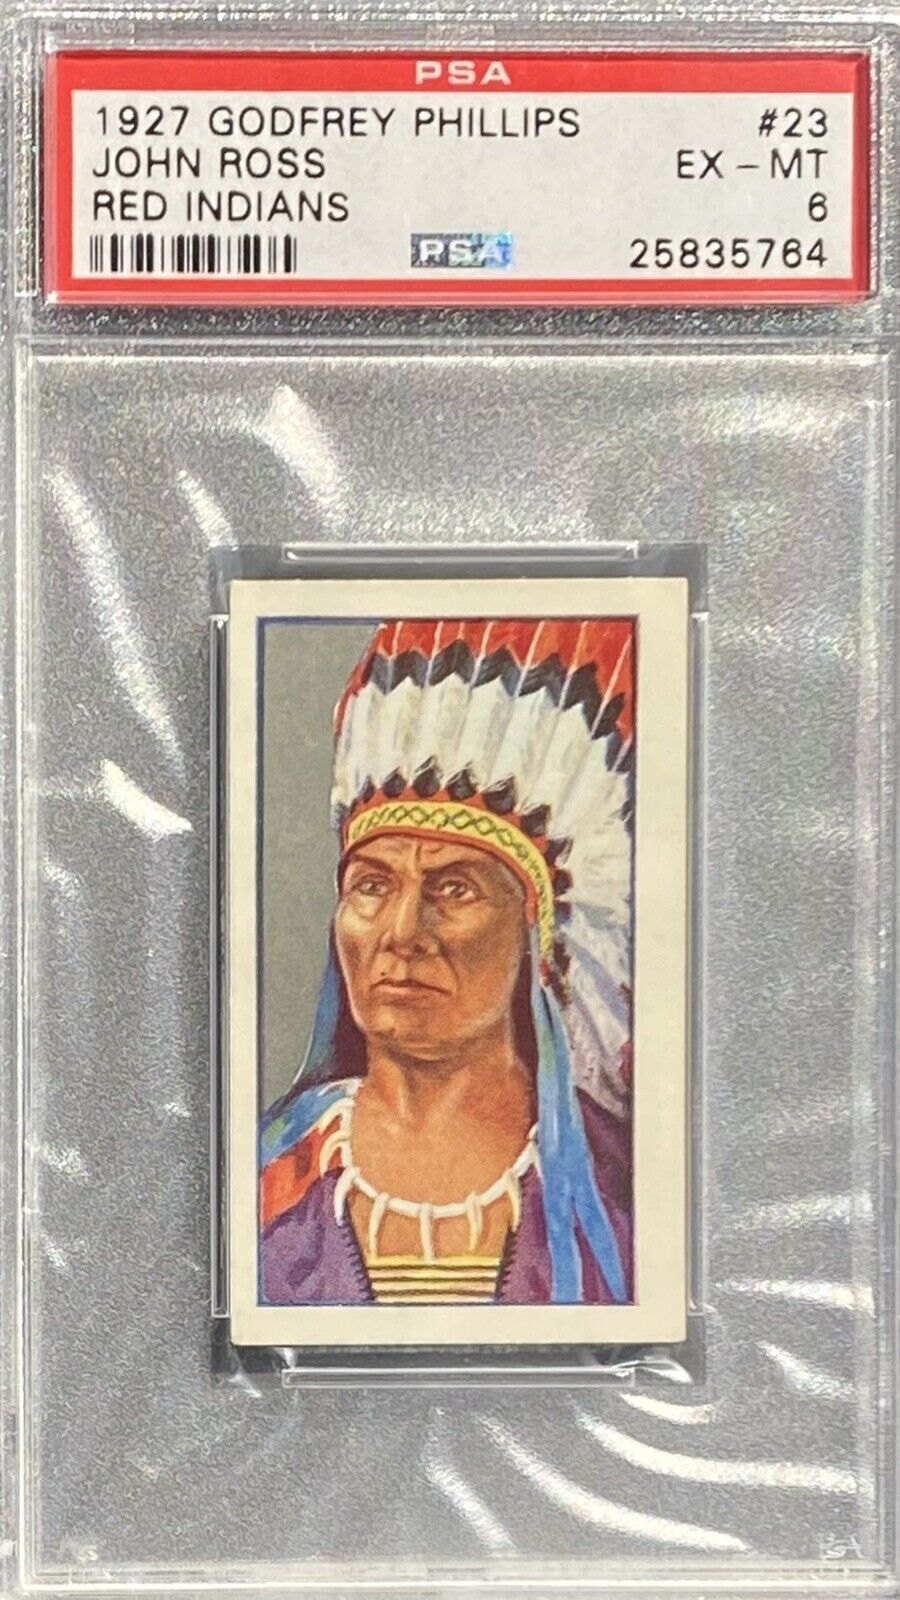 1927 Godfrey Phillips Red Indians #23 JOHN ROSS - PSA 6 EX-MT